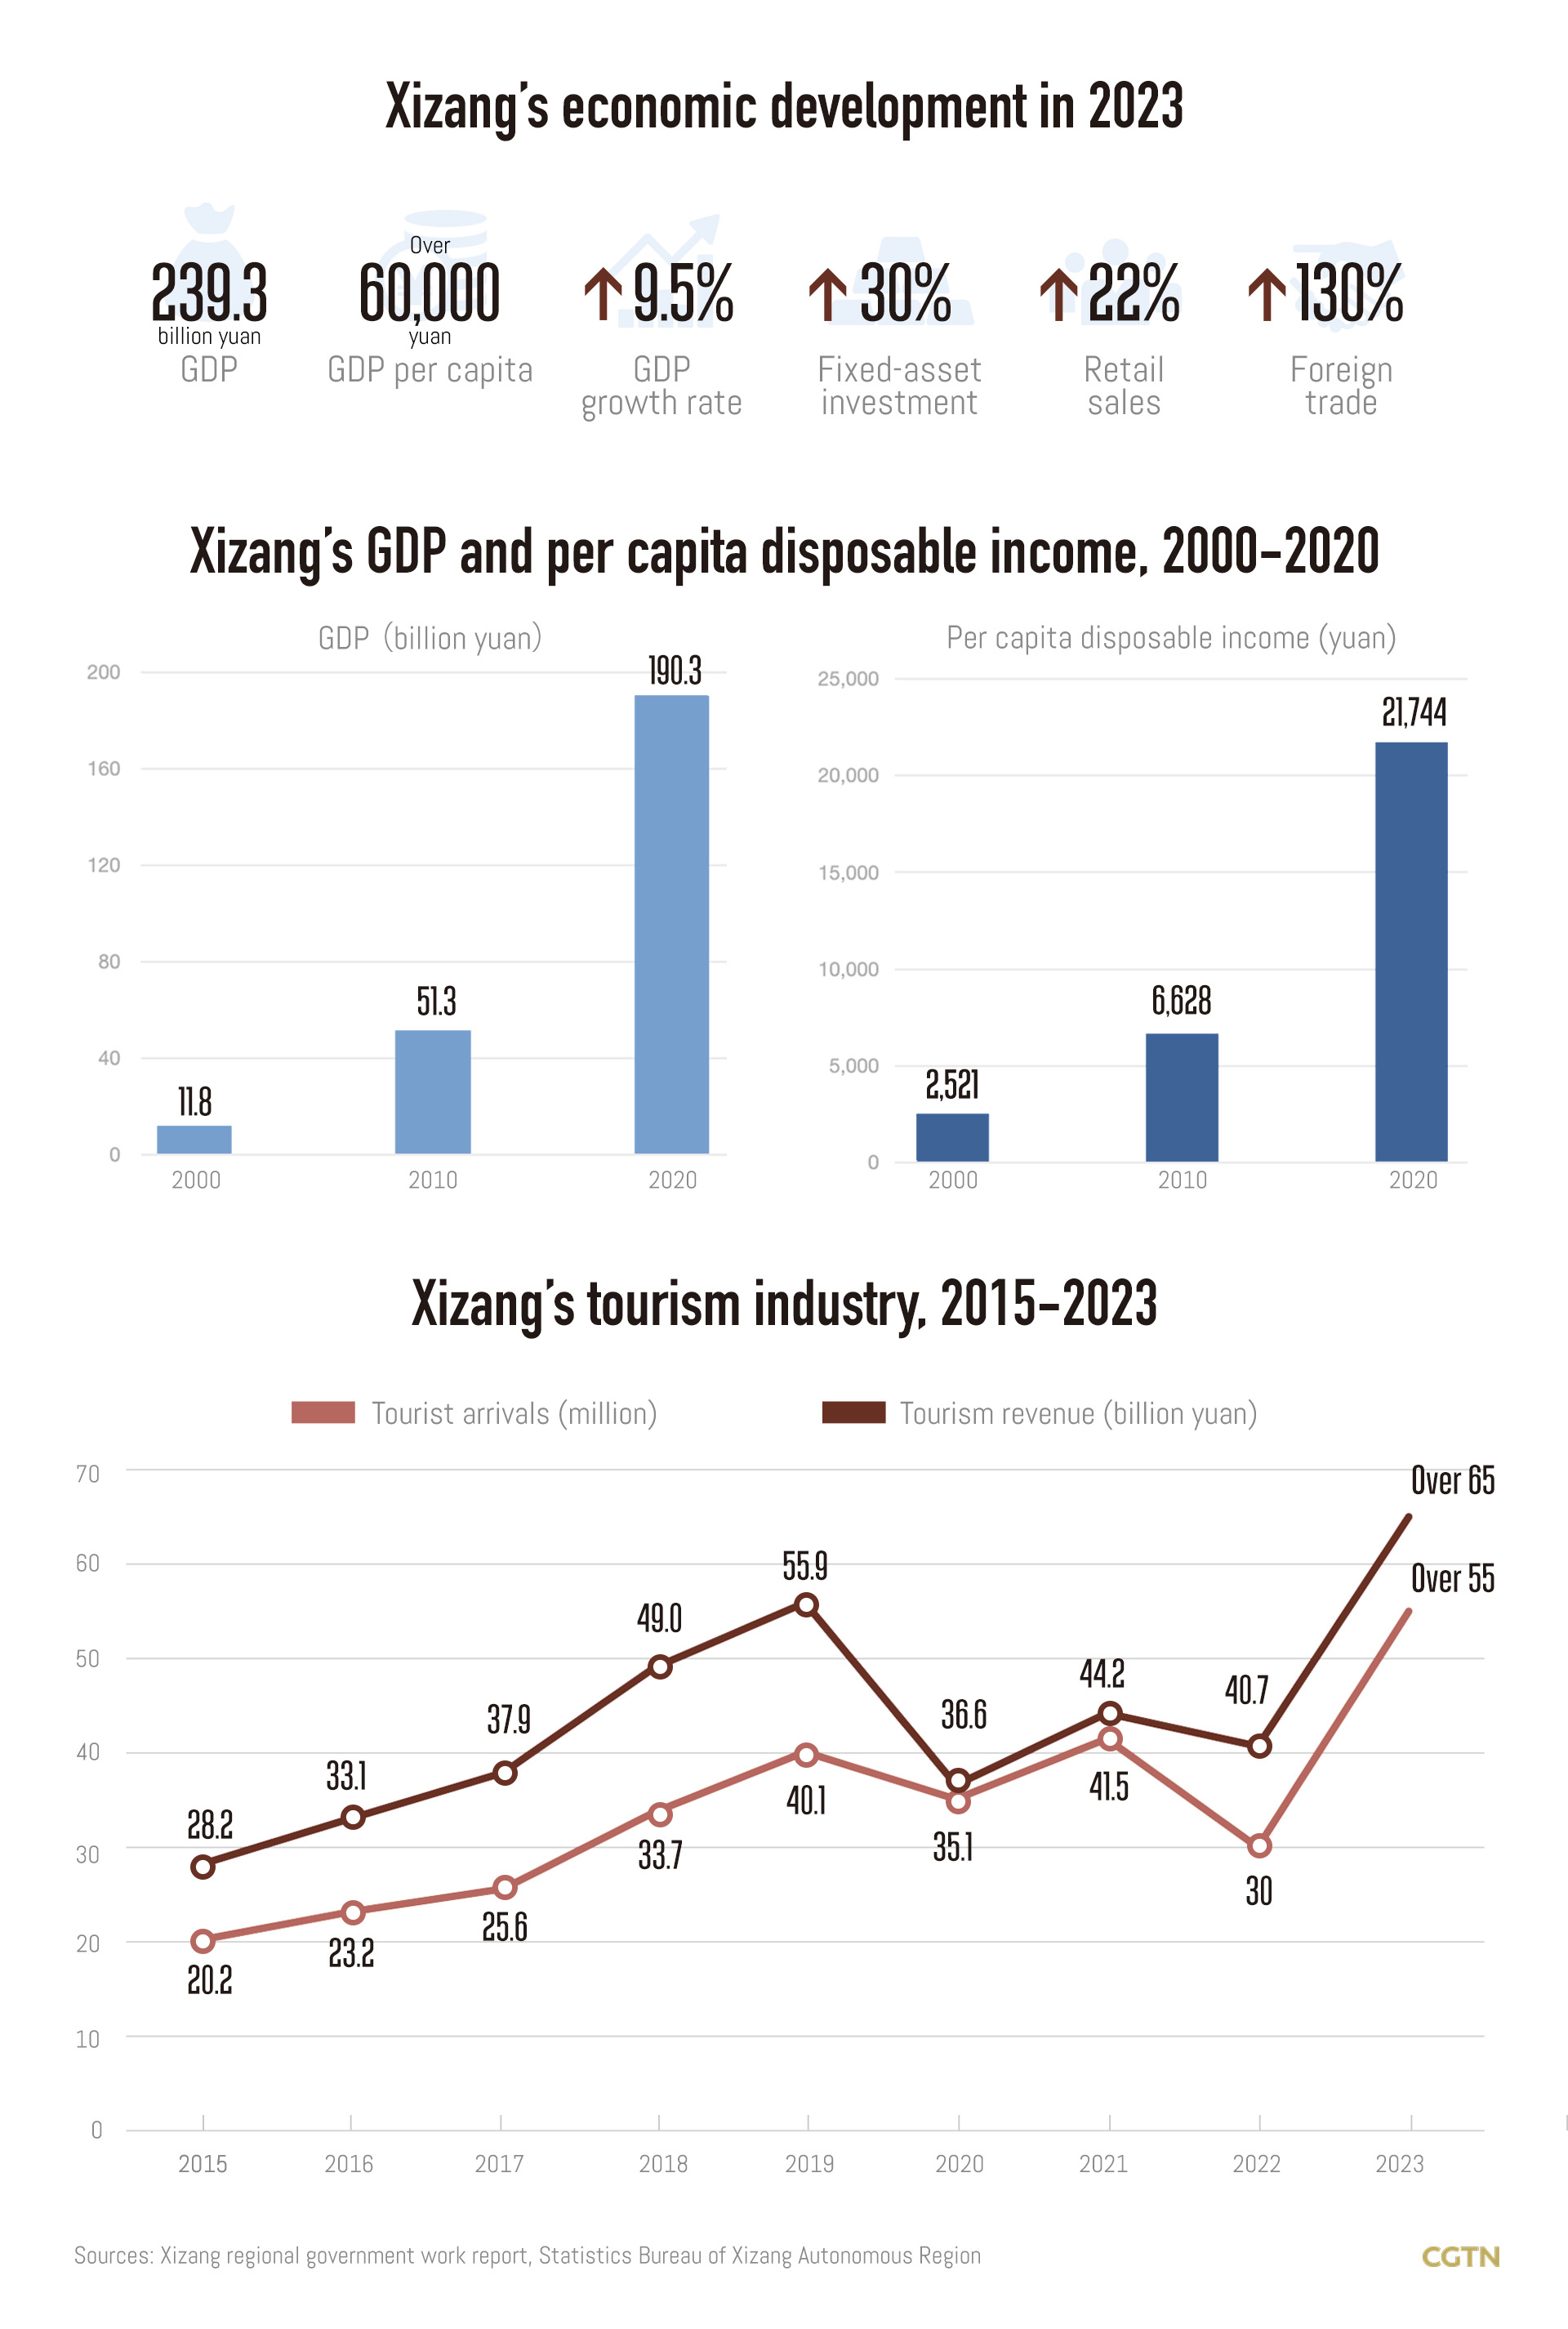 Graphics: Rapid economic development in Xizang